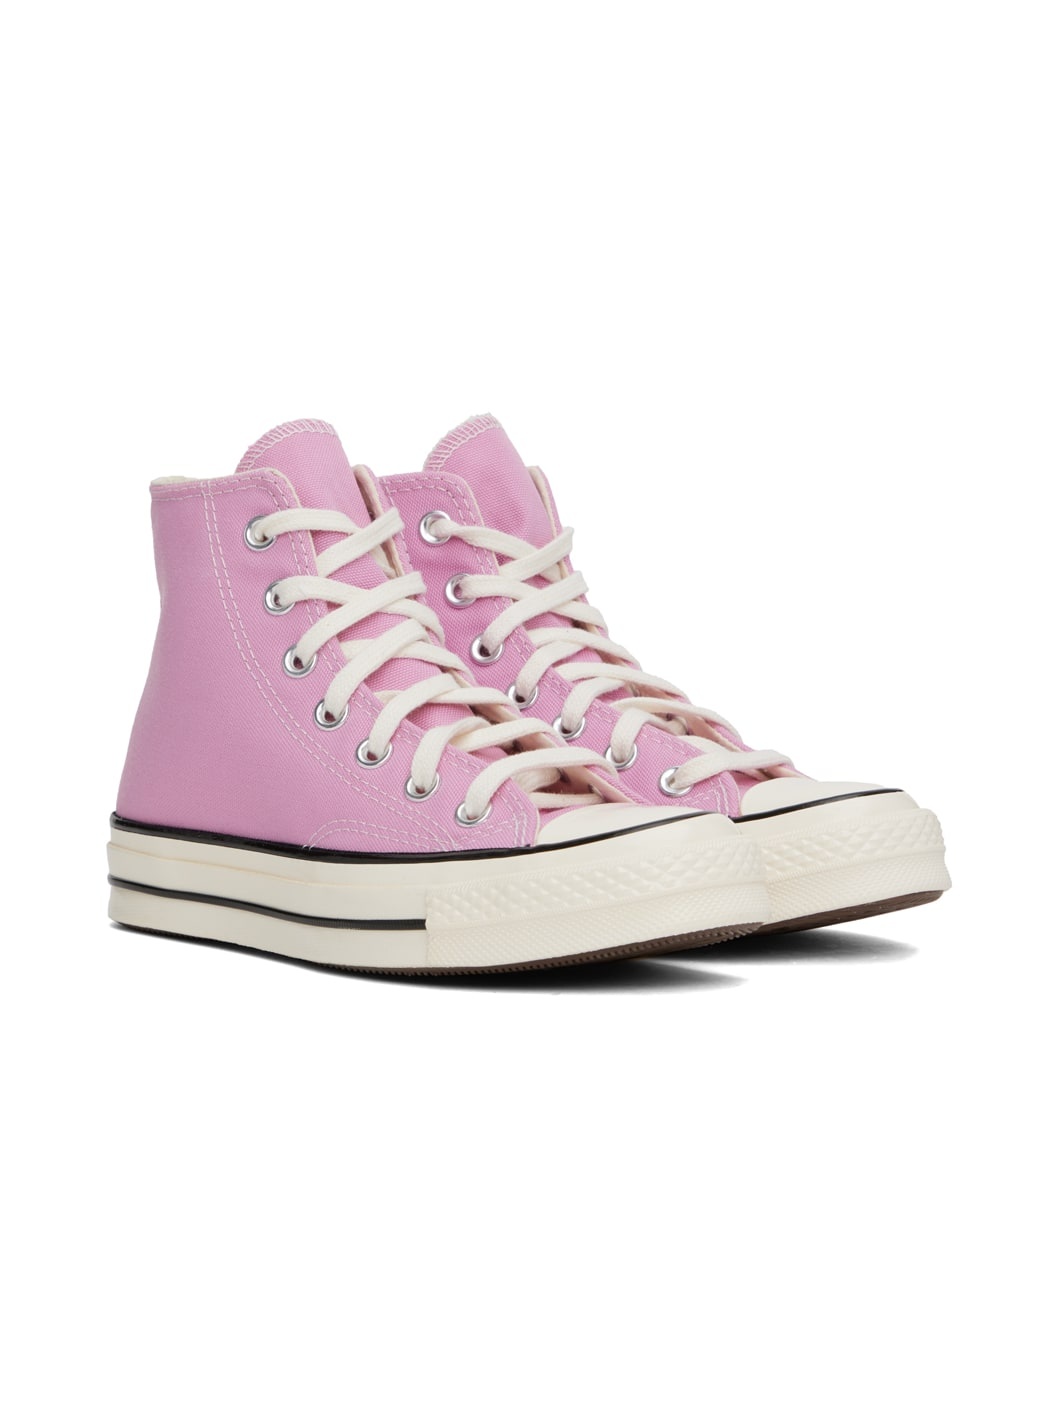 Pink Chuck 70 Seasonal Color Sneakers - 4